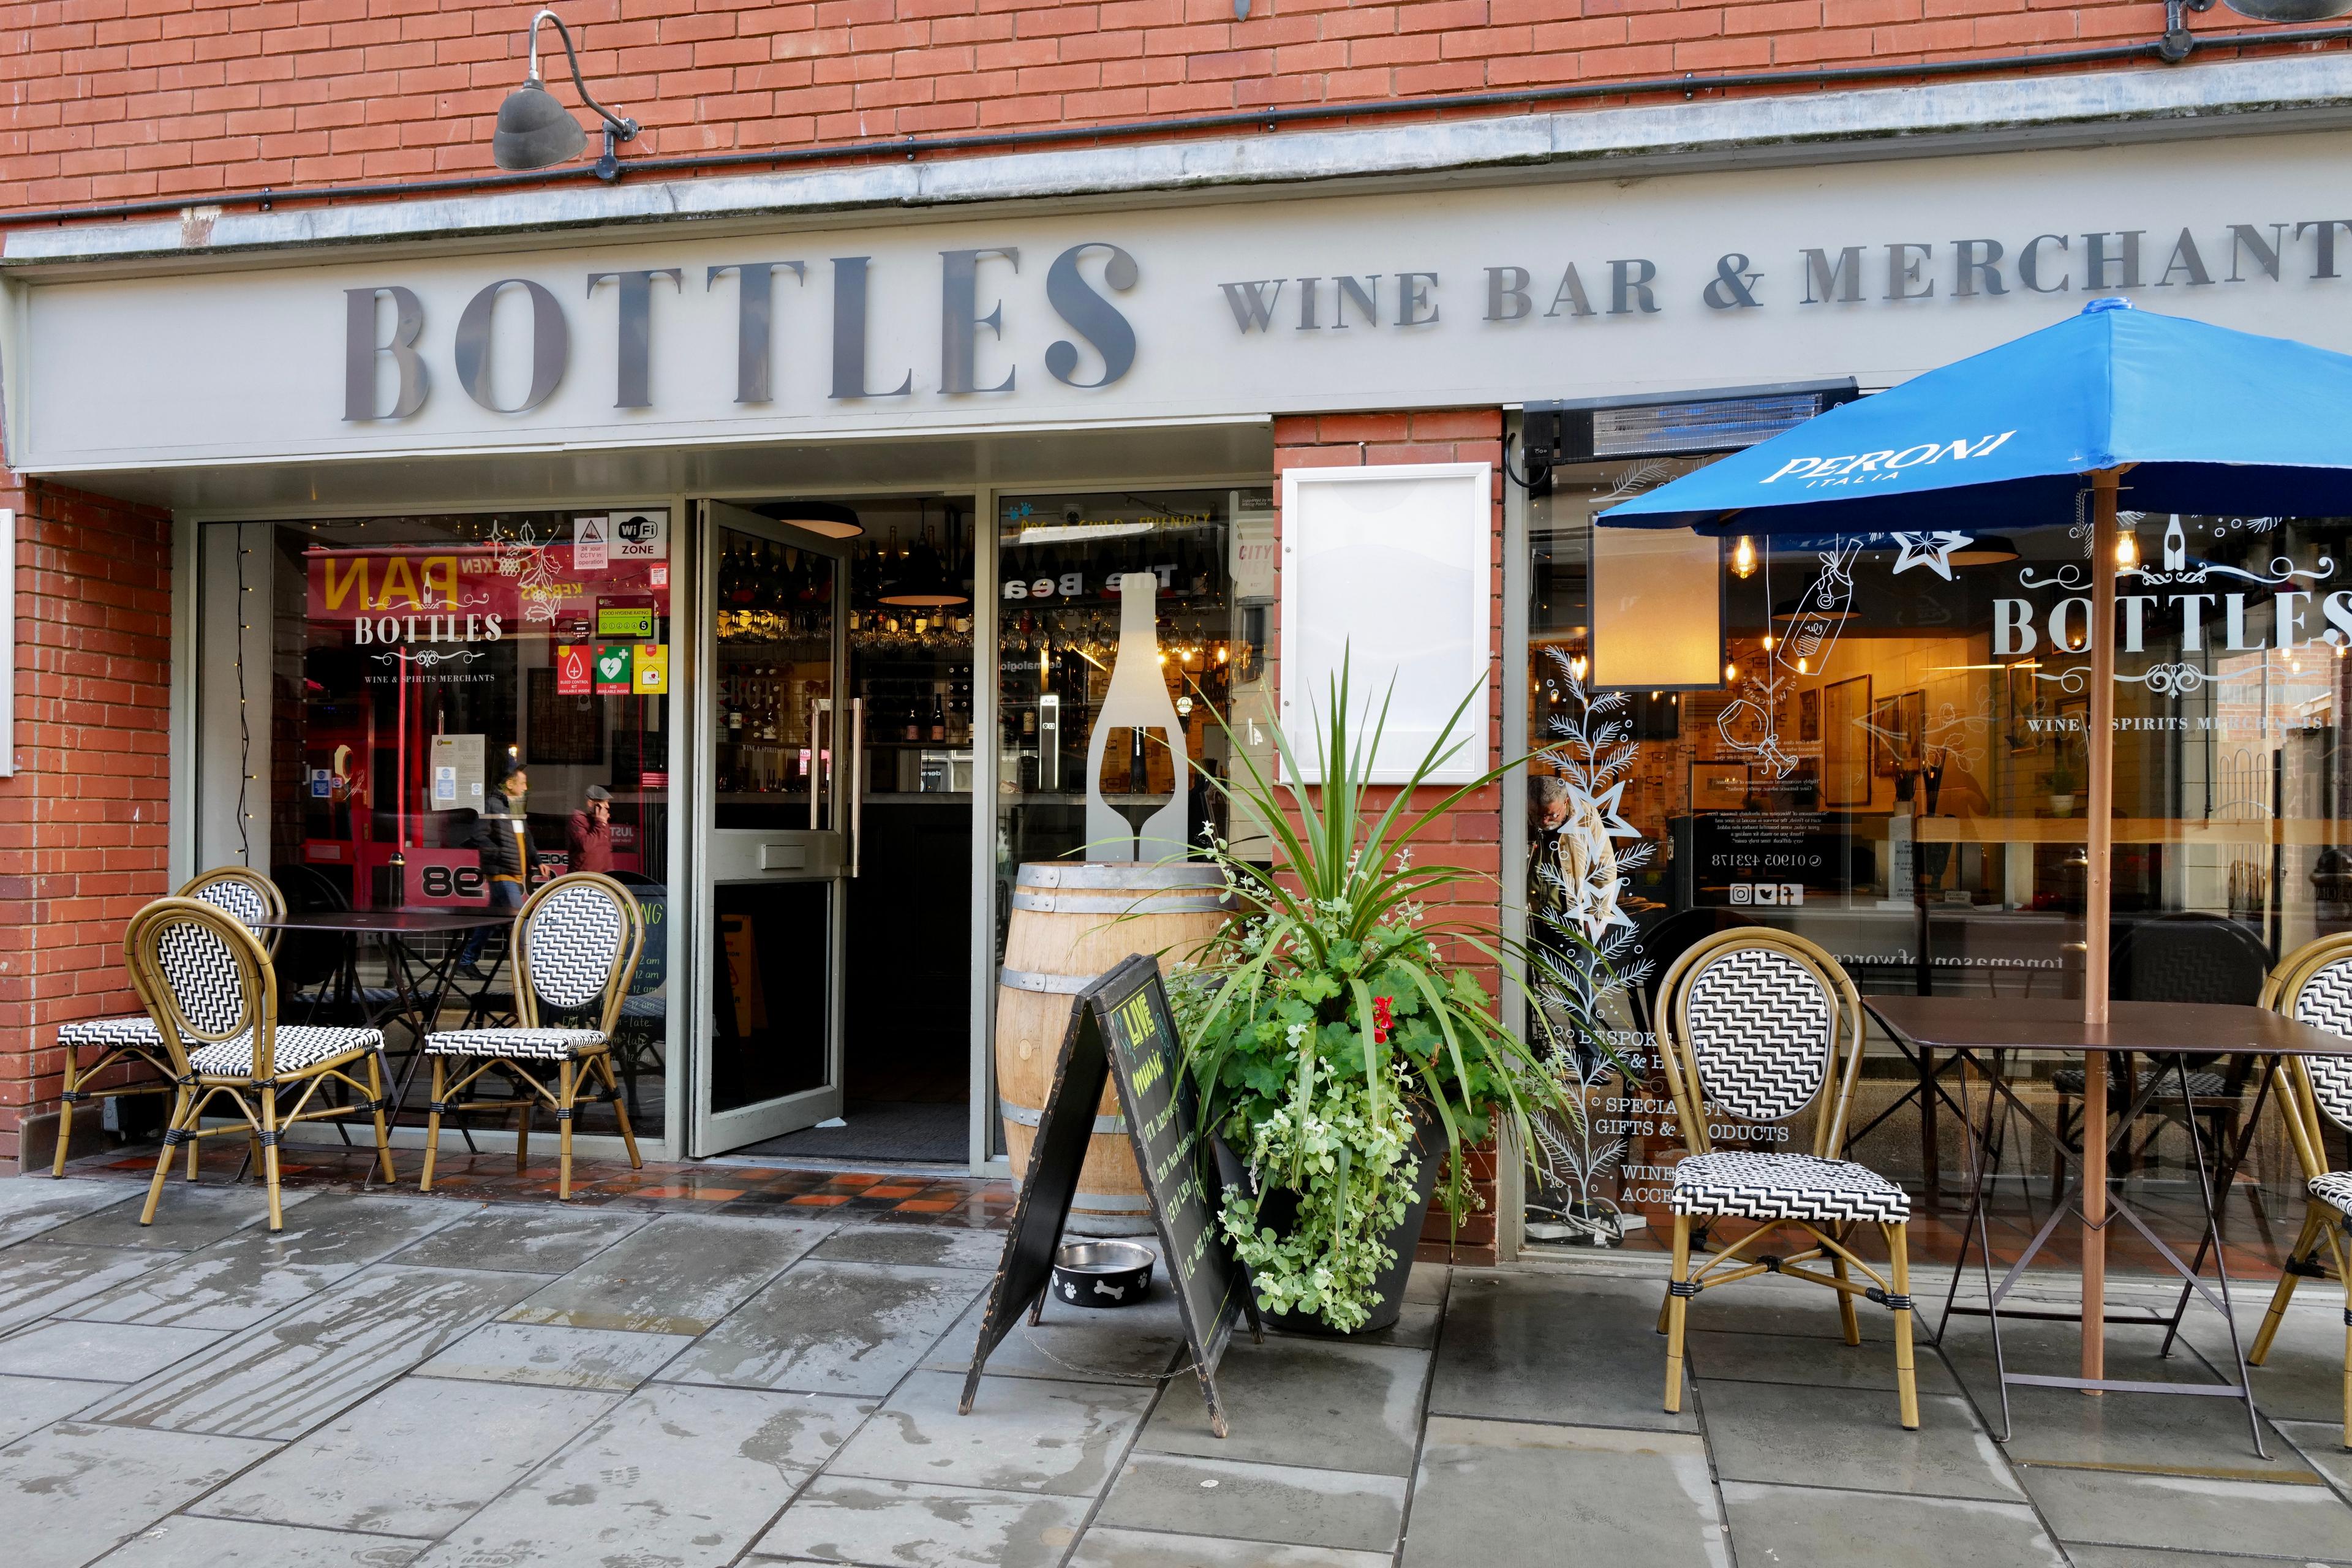 Bottles Wine Bar, Bottles Wine Bar & Merchants photo #1